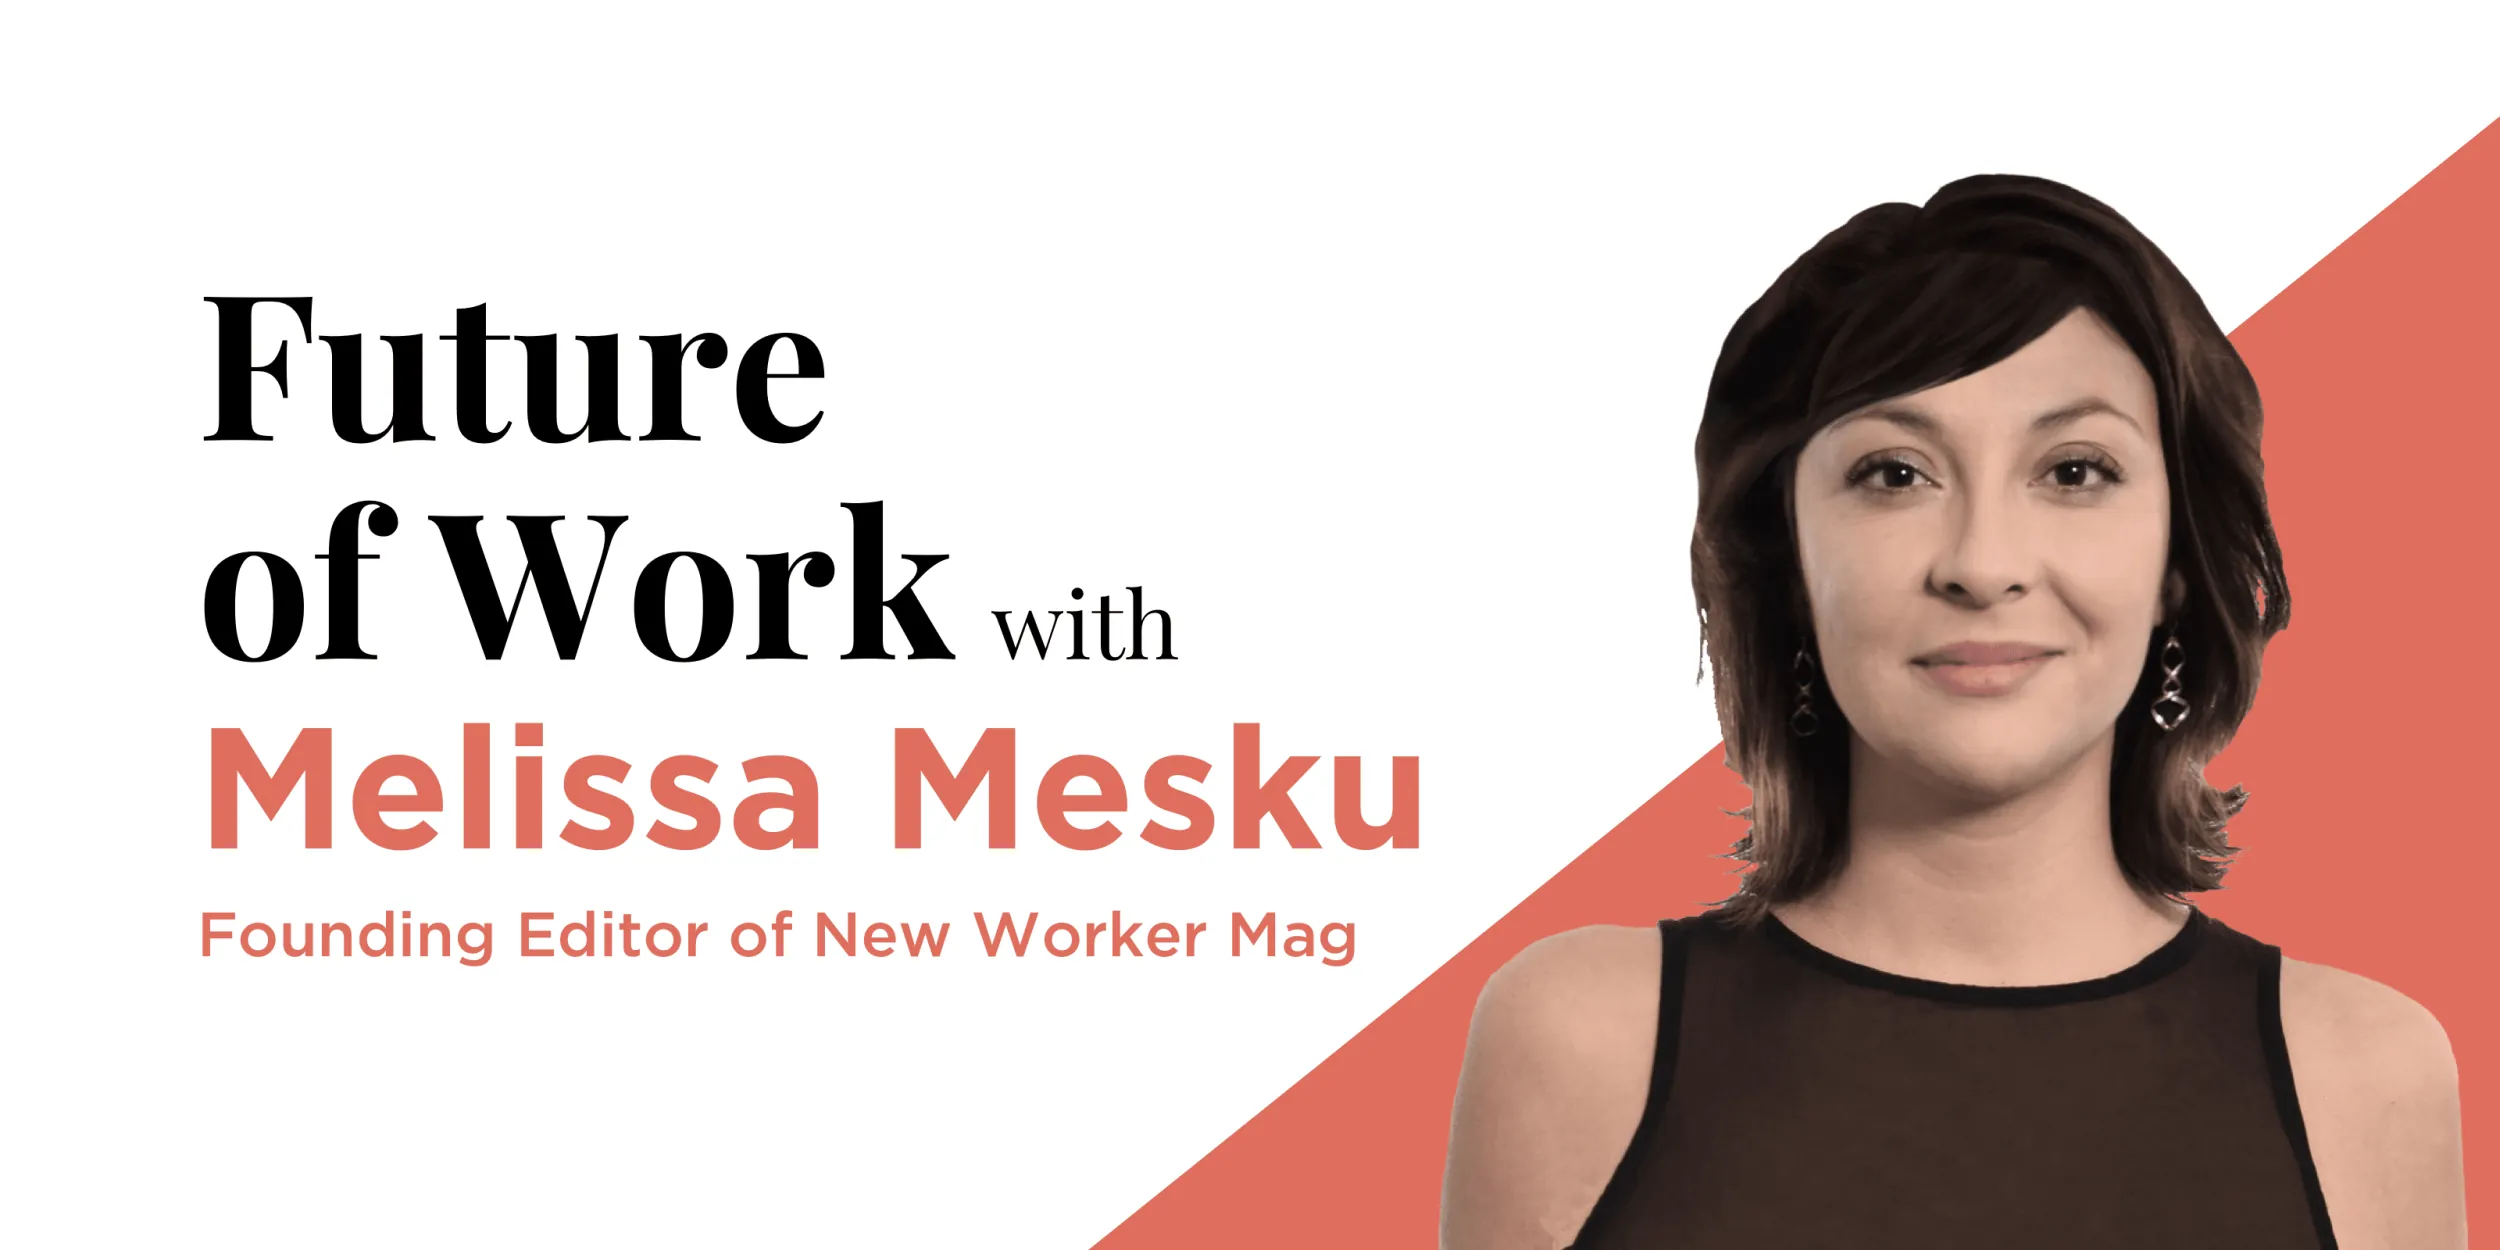 Future of work with Melissa Mesku